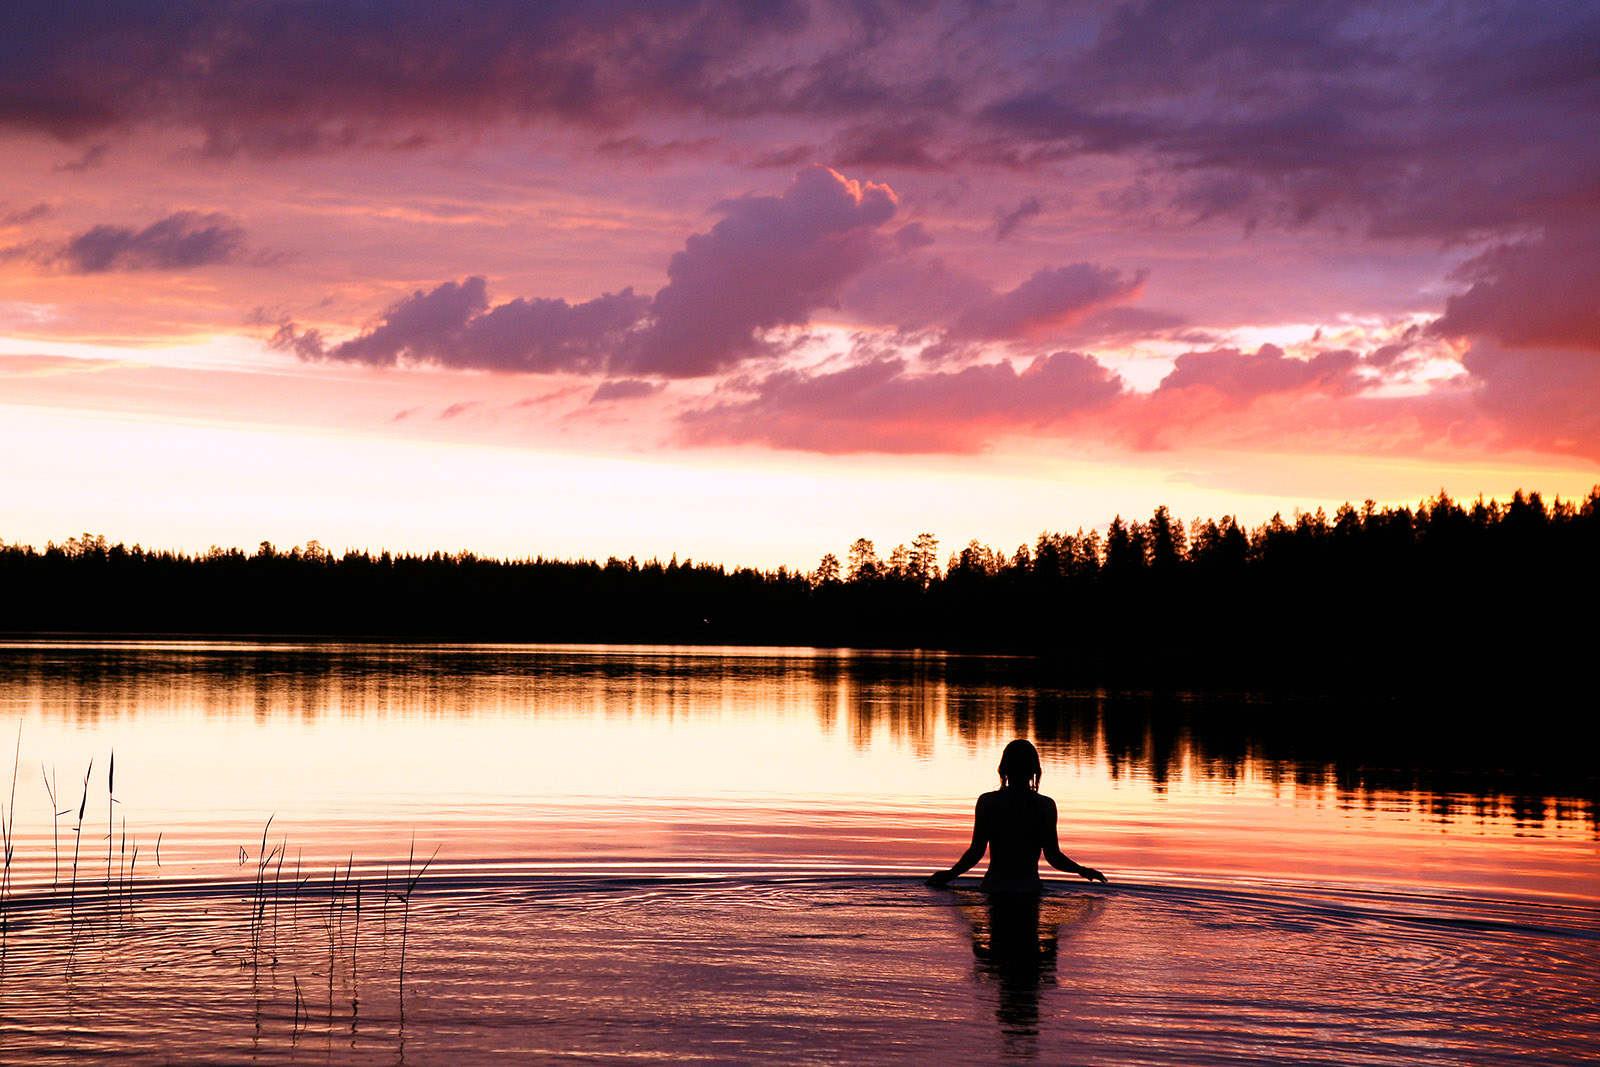 nadando-lago-Purnujarvi-visit-finland-HarriTarvainen.jpg 